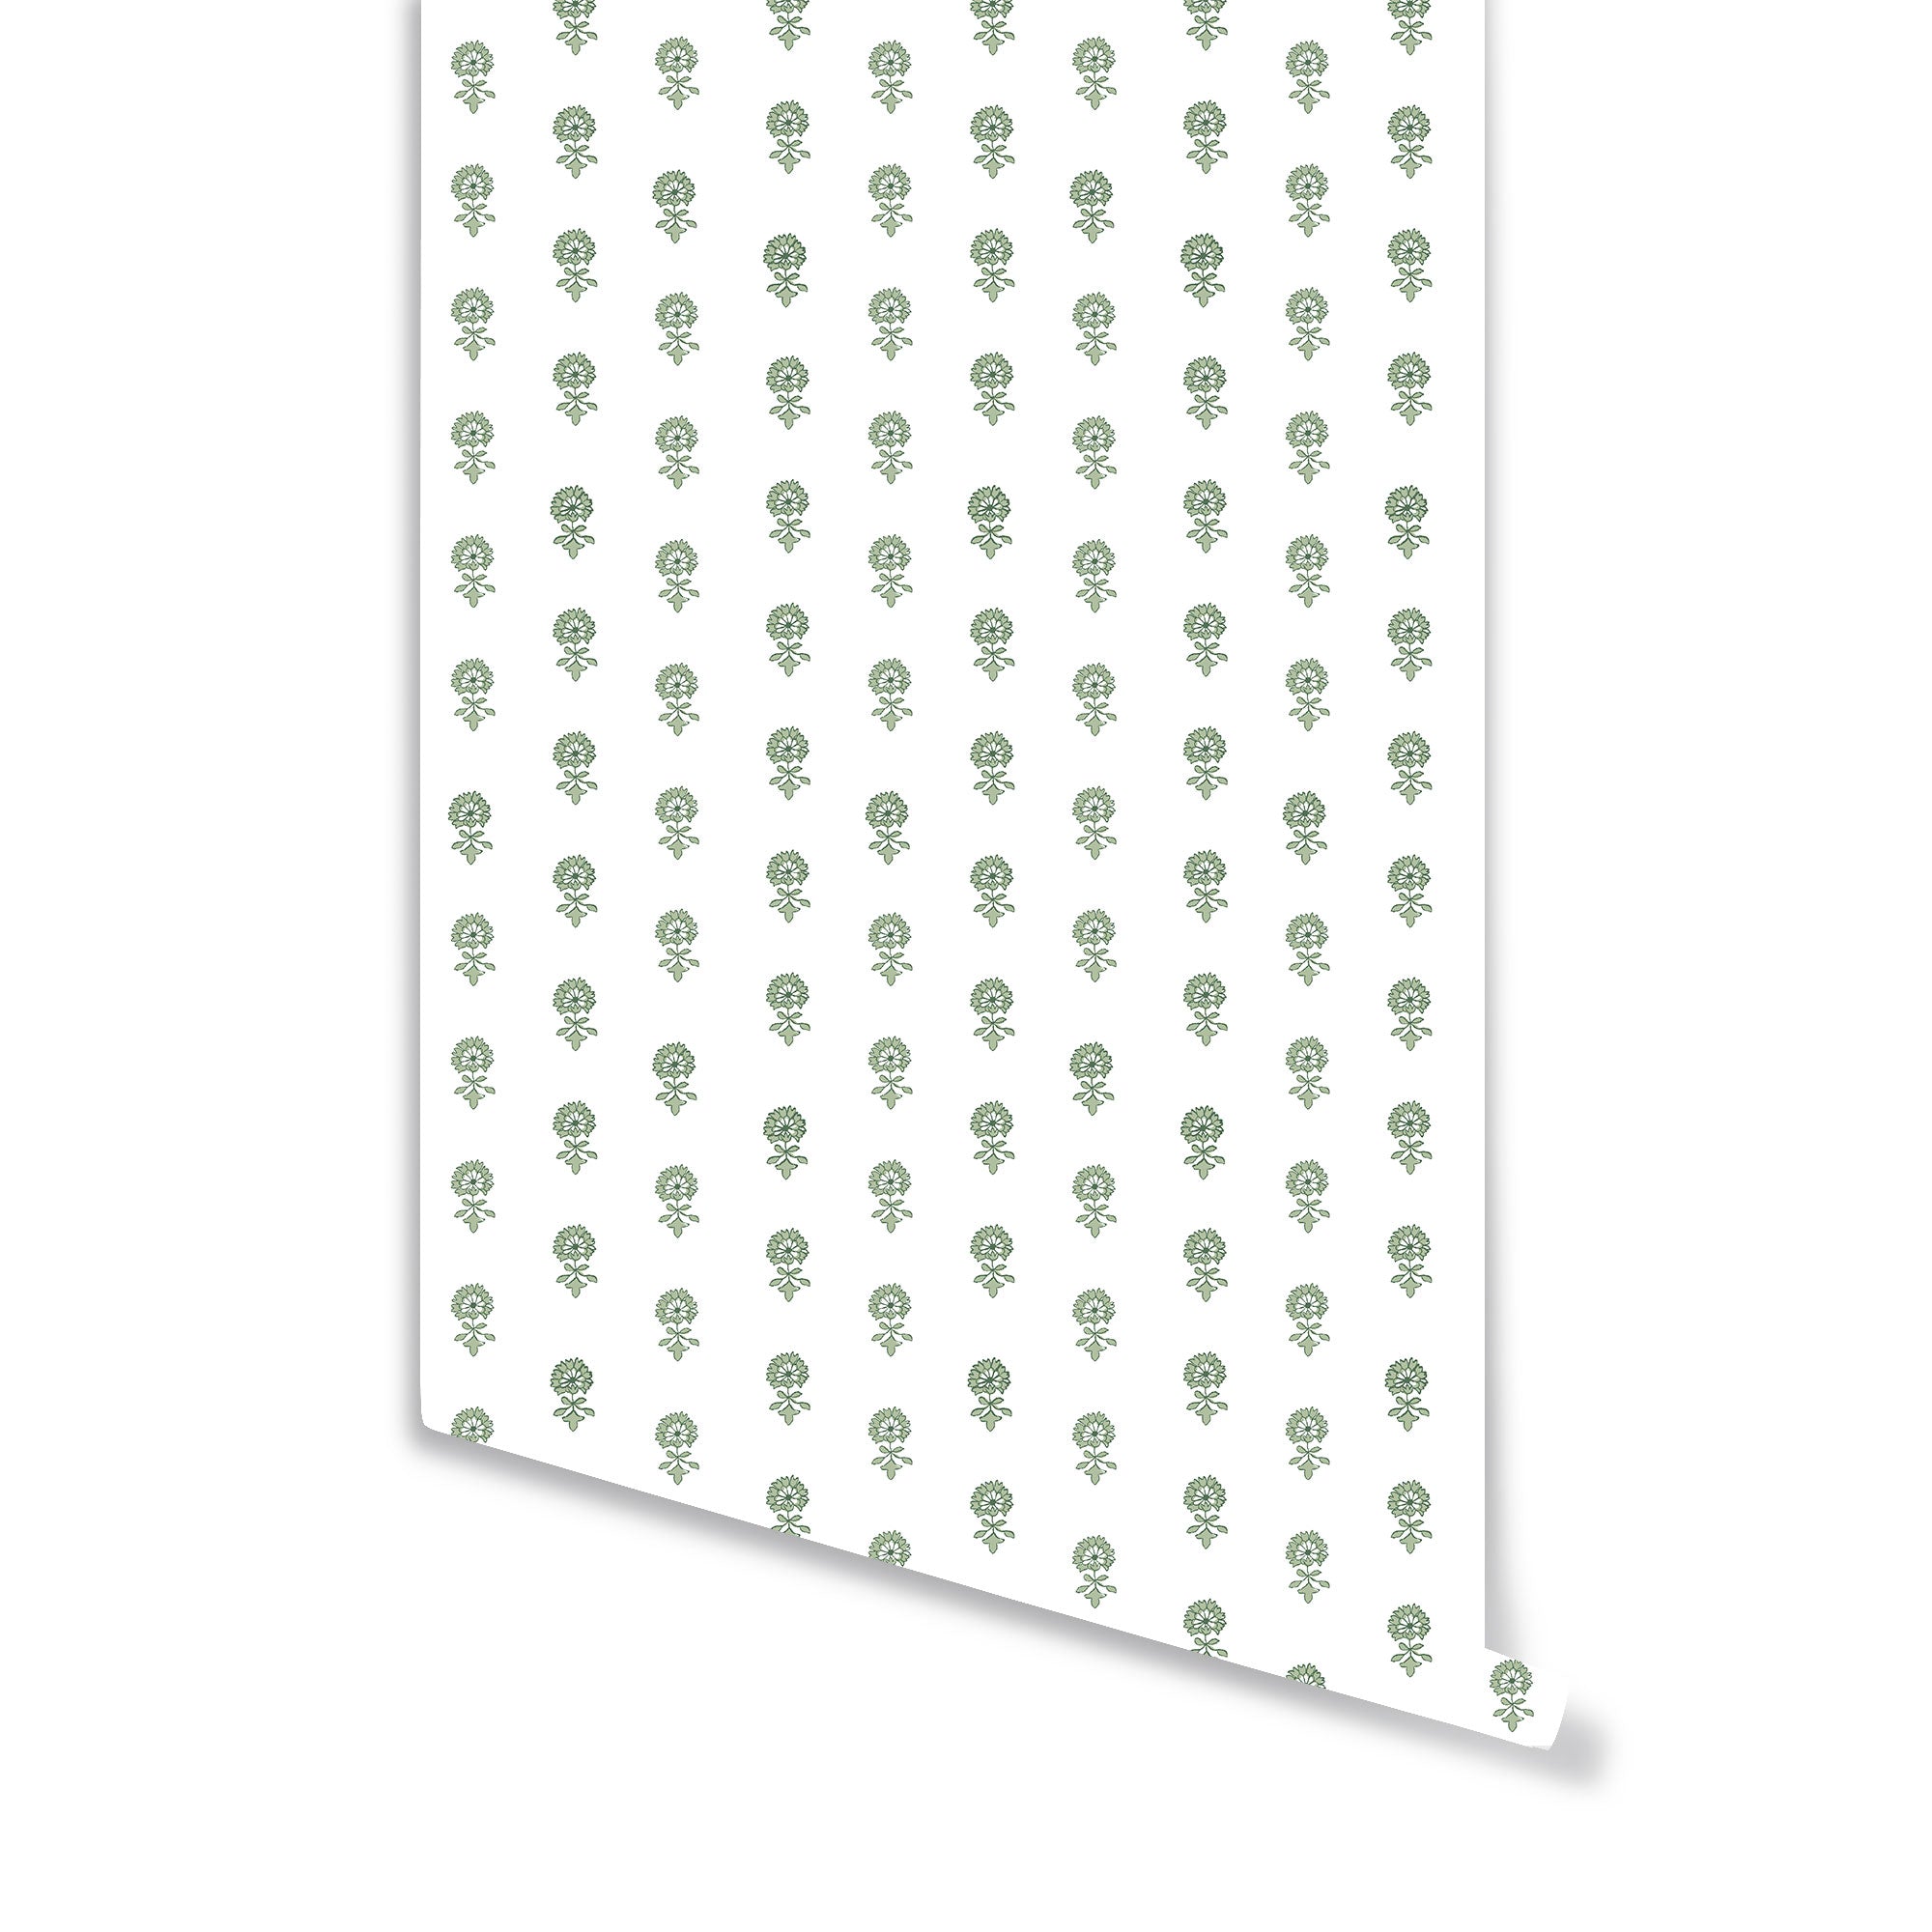 Sage green polka dot tissue paper